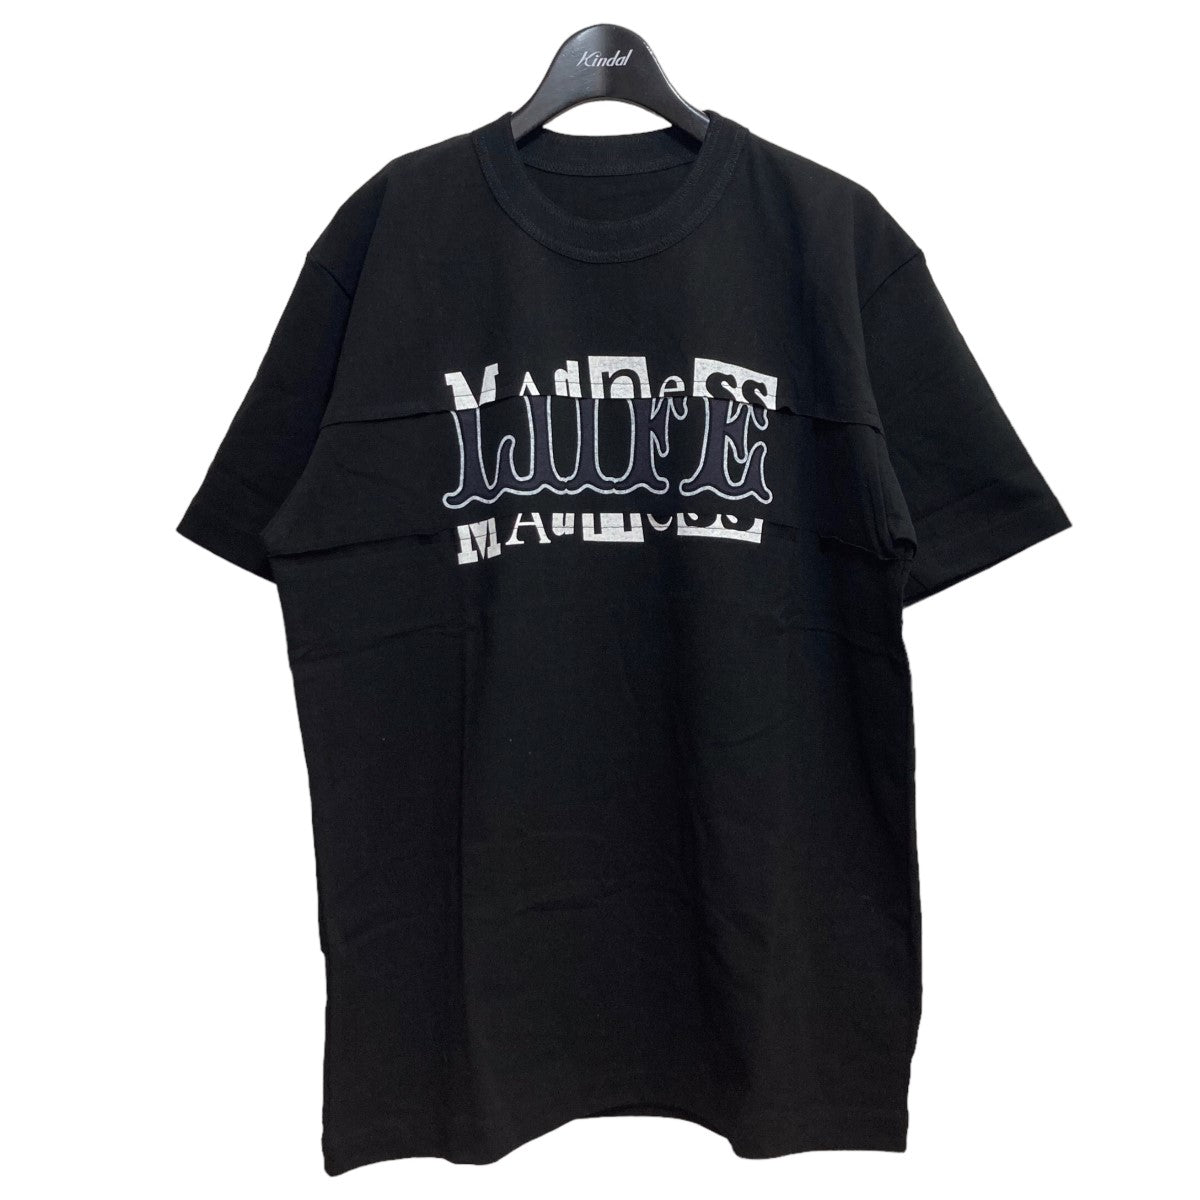 ⬜︎商品詳細⬜︎sacai Madness Archive Mix T-Shirt